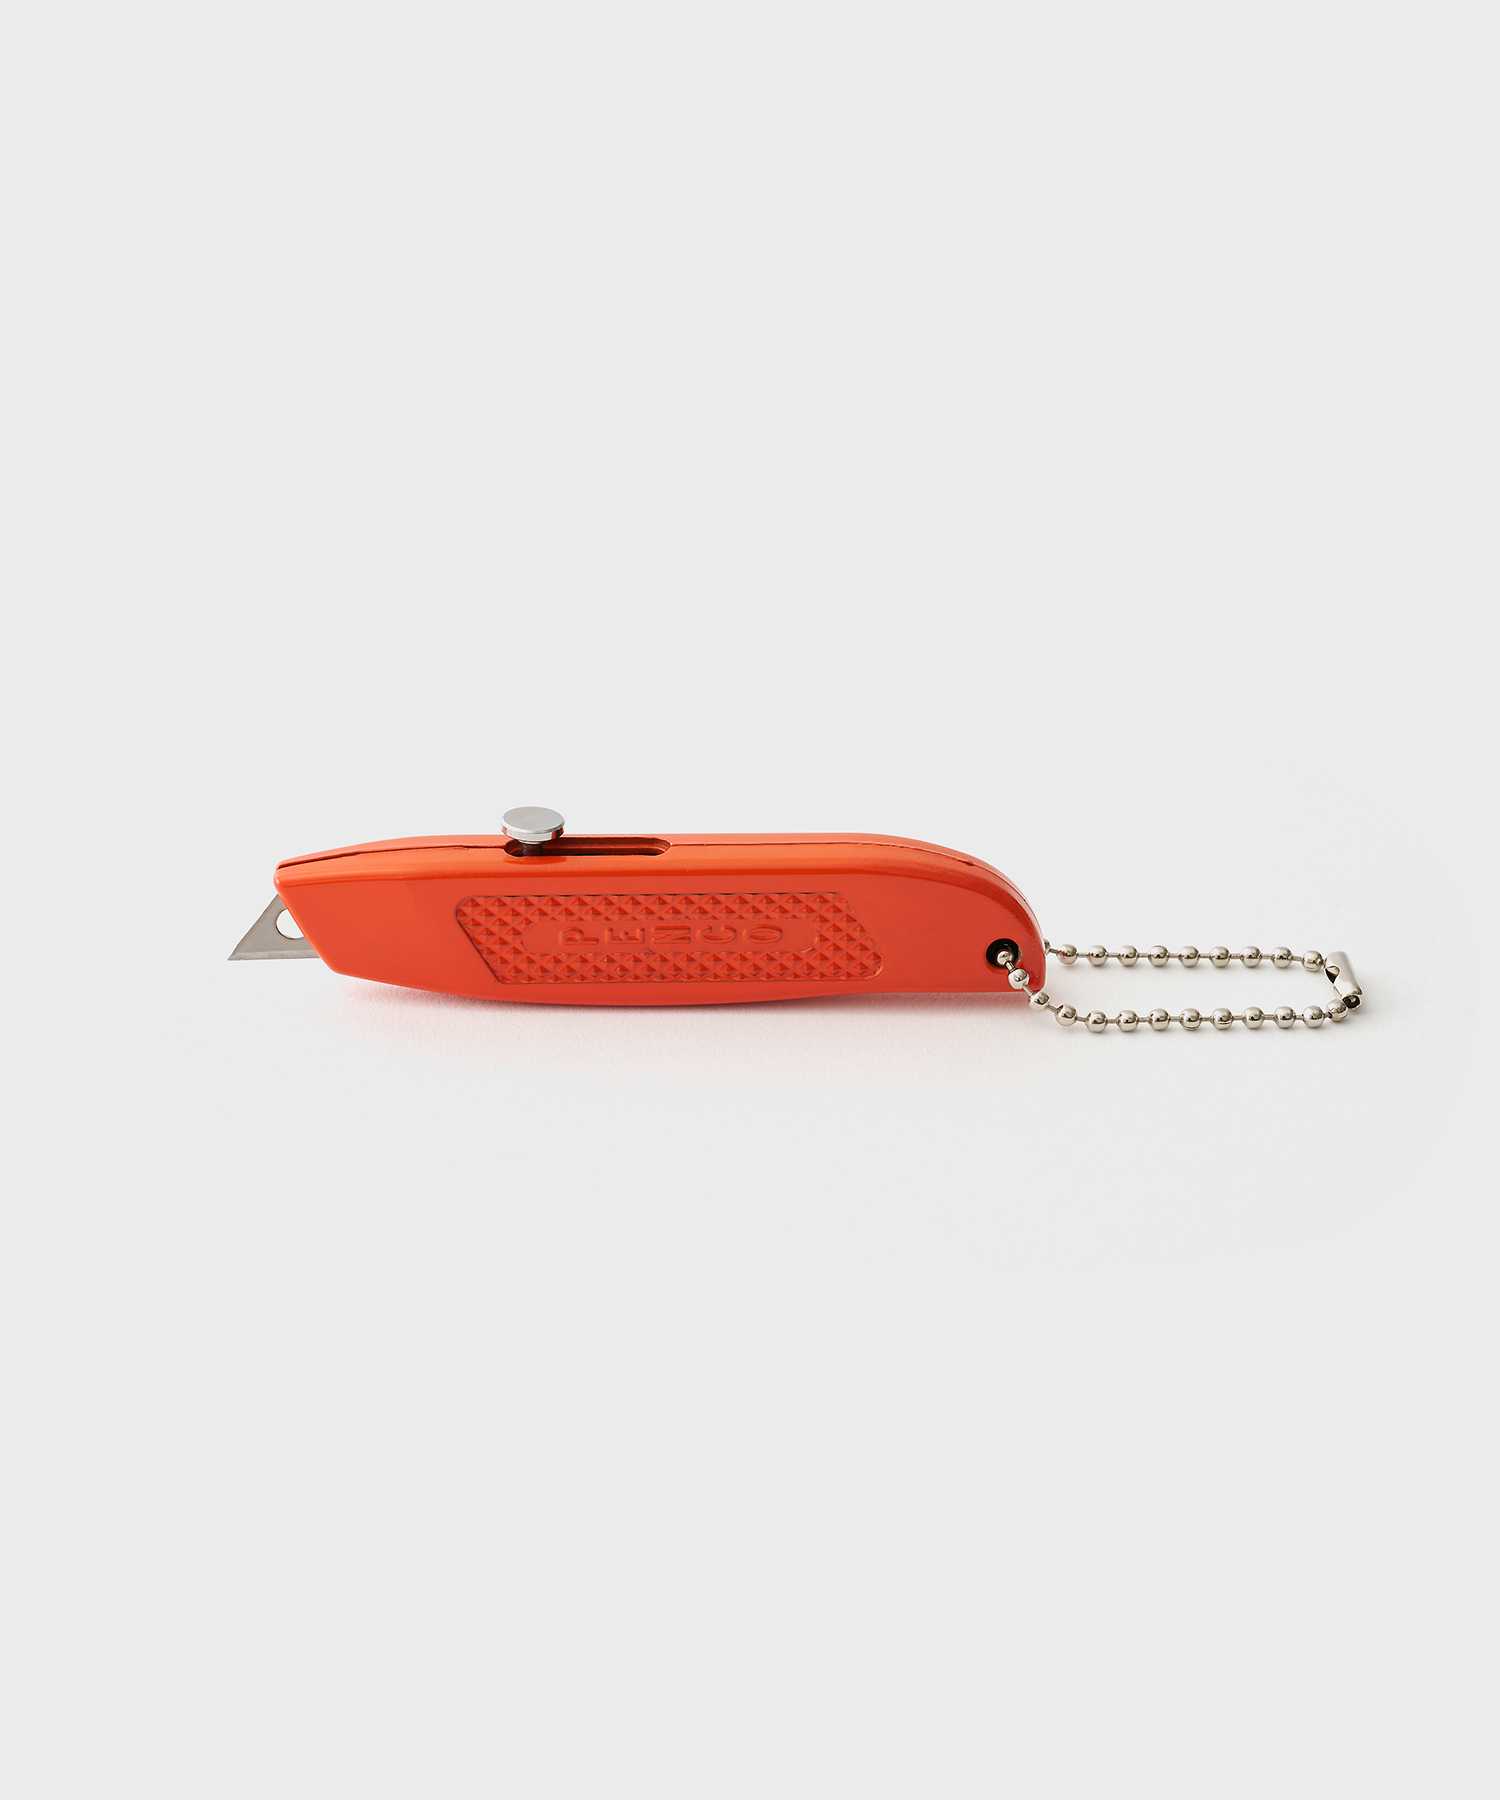 Penco Utility Knife (Orange)